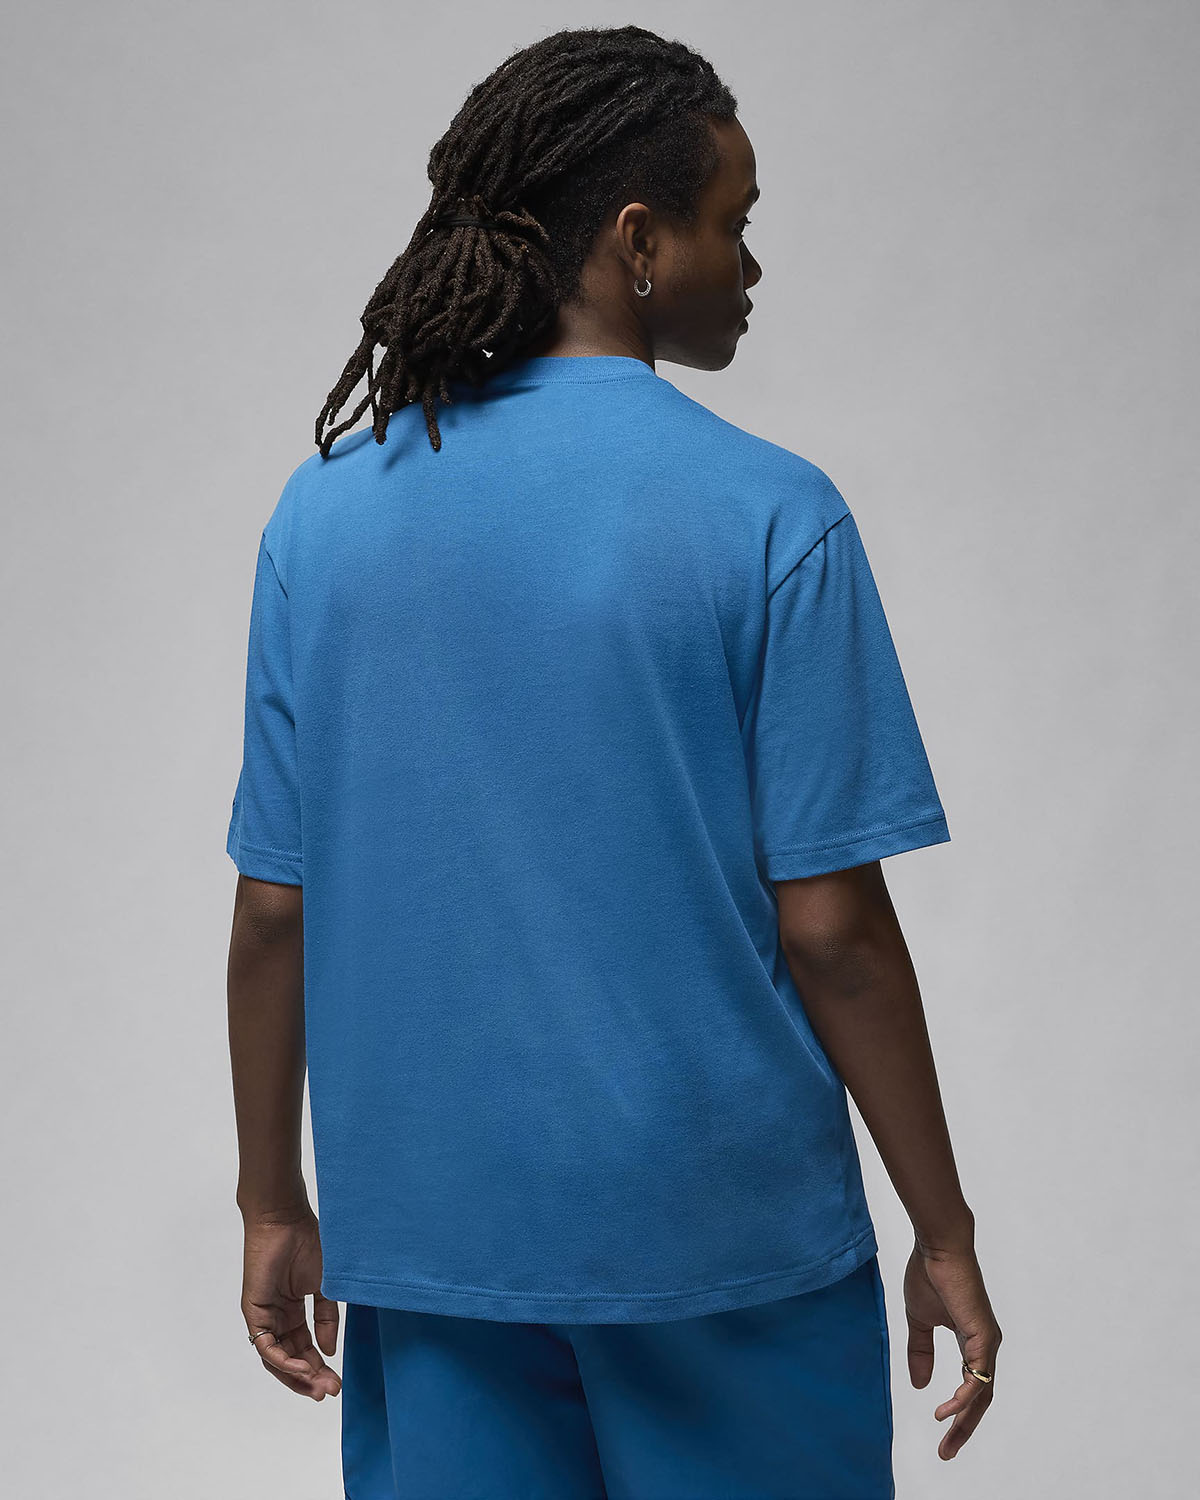 Air Jordan 1 Patch T Shirt Industrial Blue 2